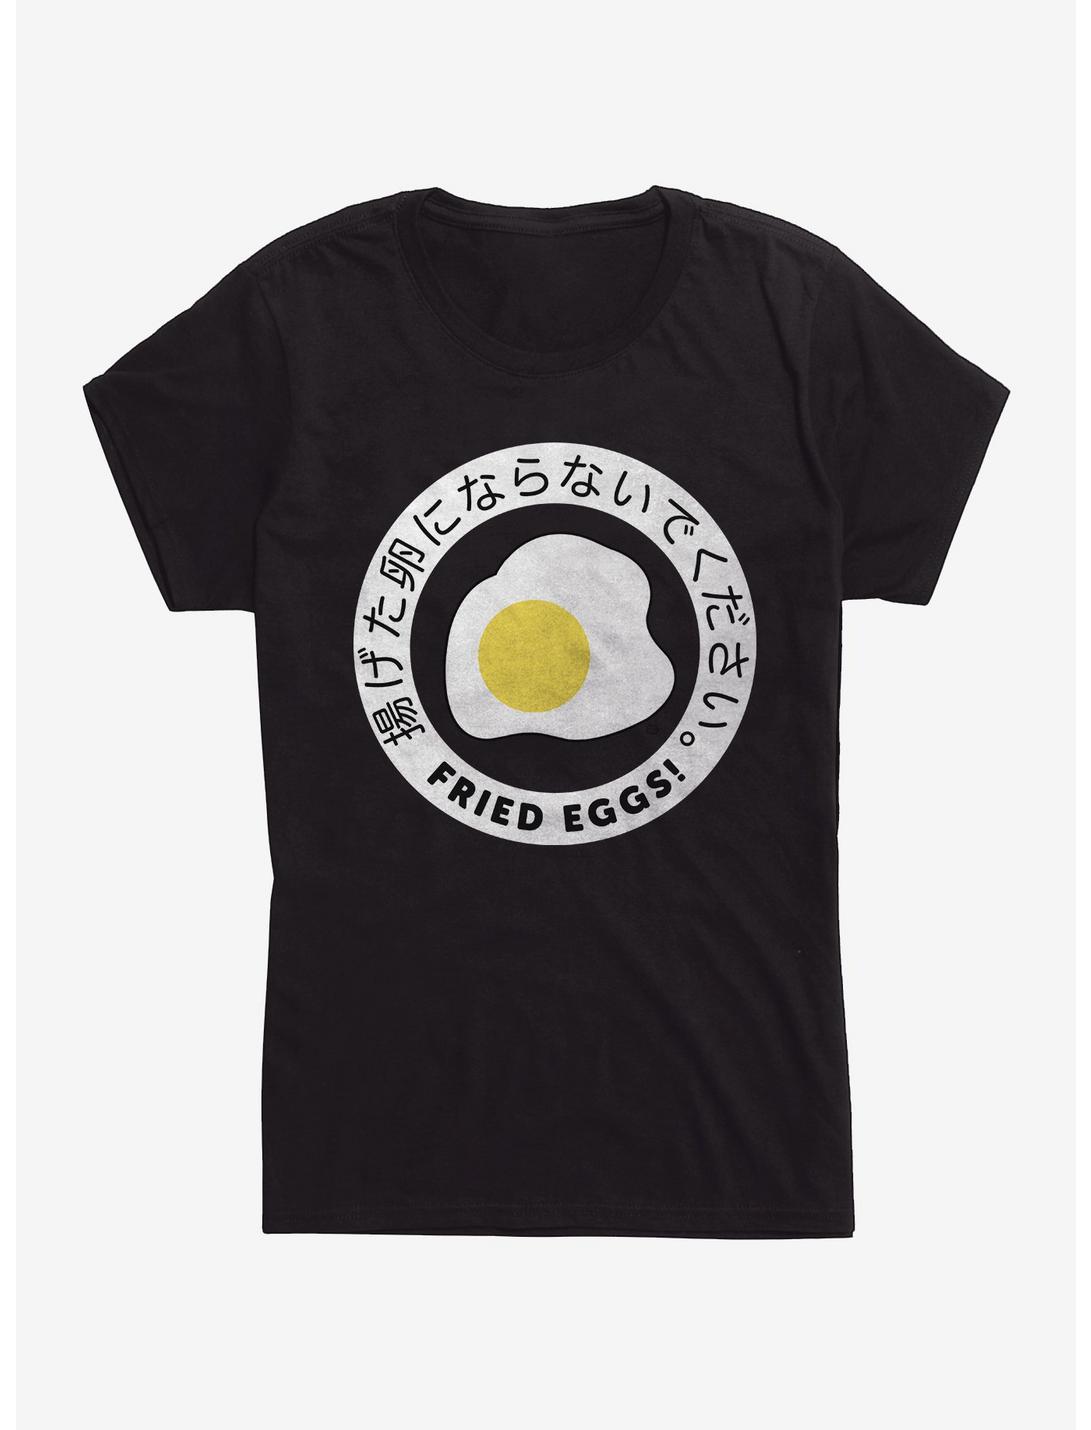 Fried Eggs Womens T-Shirt, BLACK, hi-res